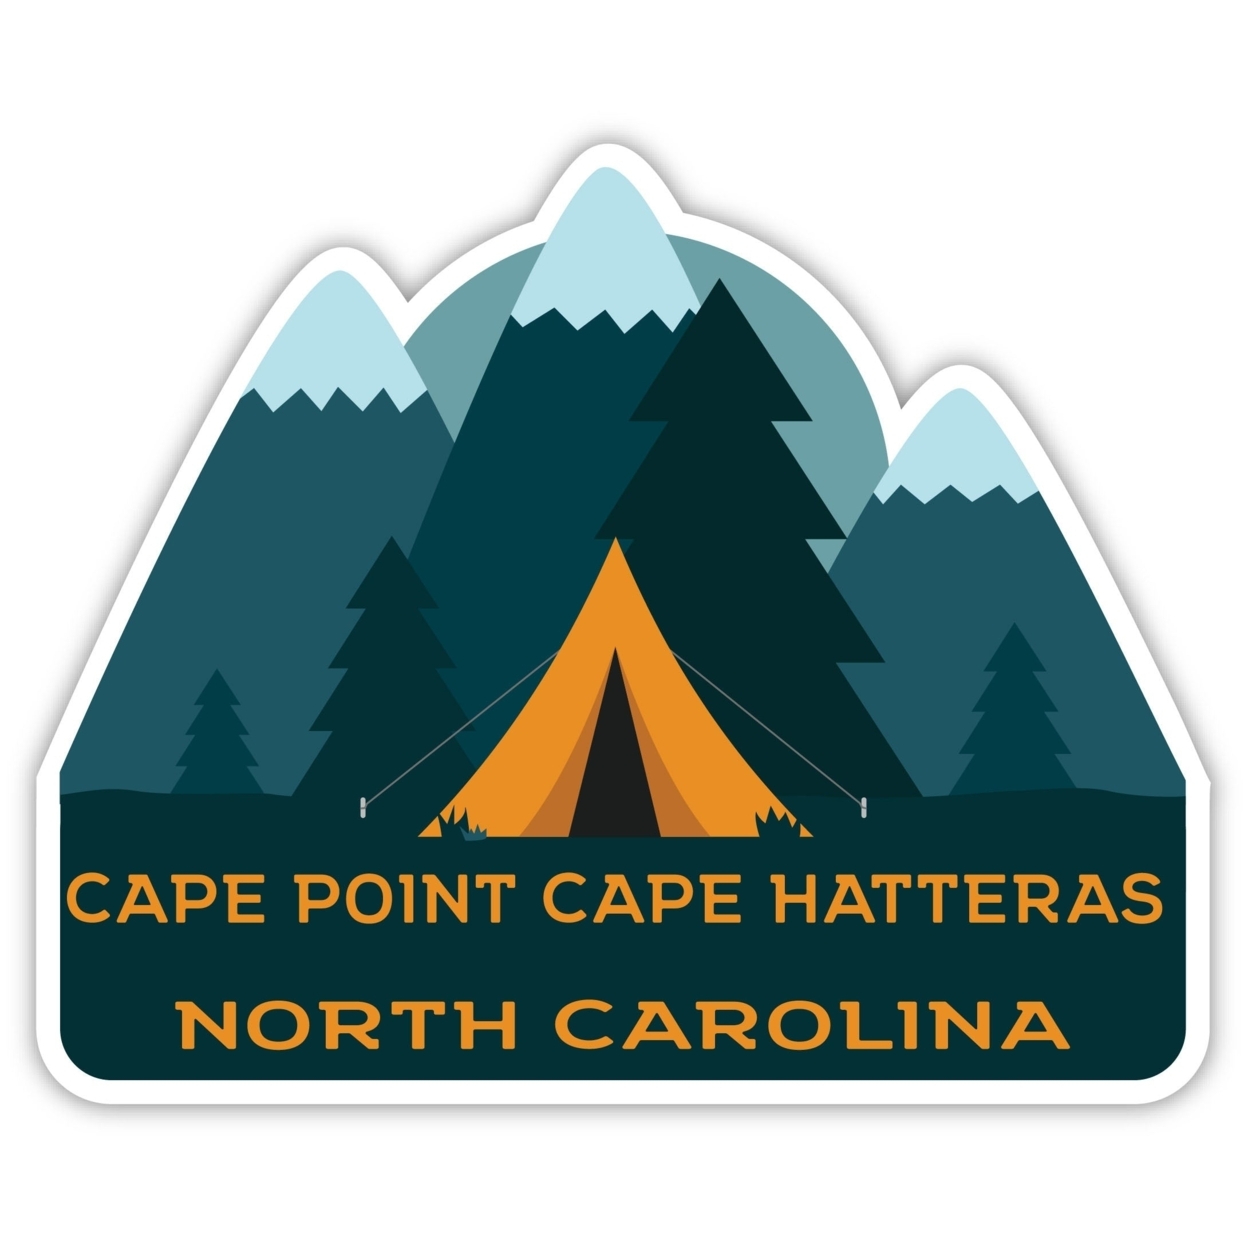 Cape Point Cape Hatteras North Carolina Souvenir Decorative Stickers (Choose Theme And Size) - Single Unit, 12-Inch, Tent